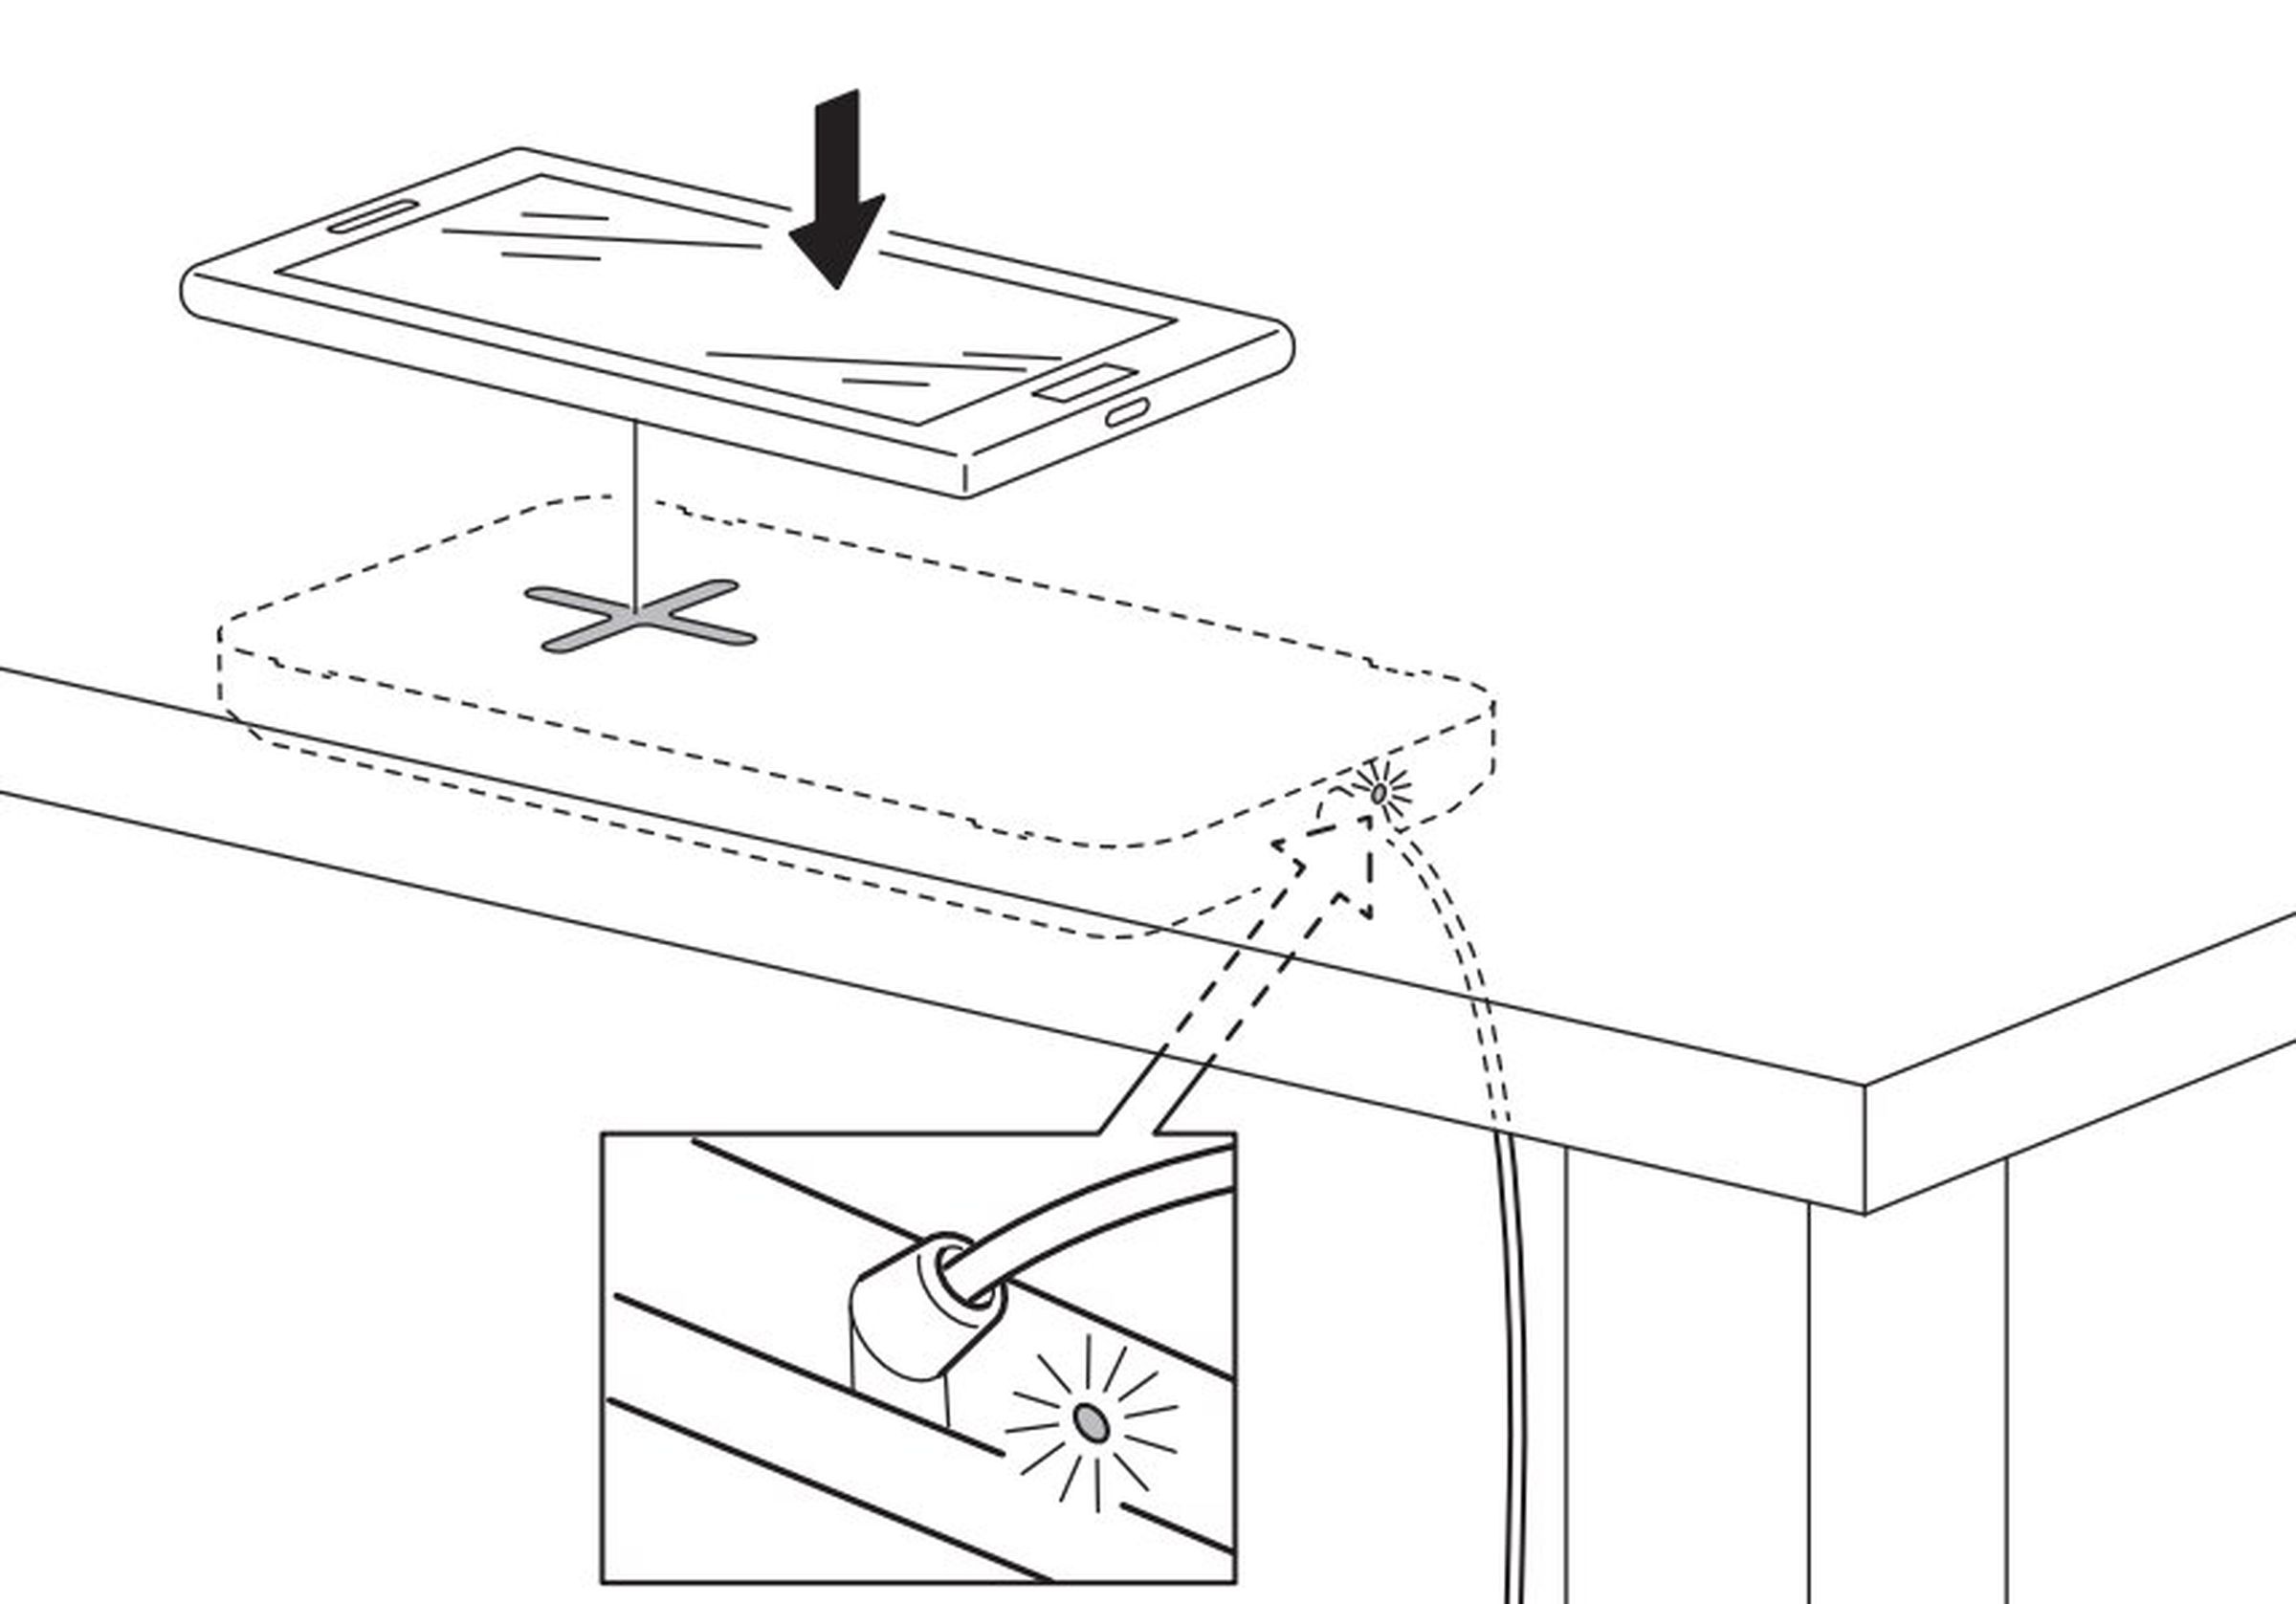 Ikea Sjömärke instructions